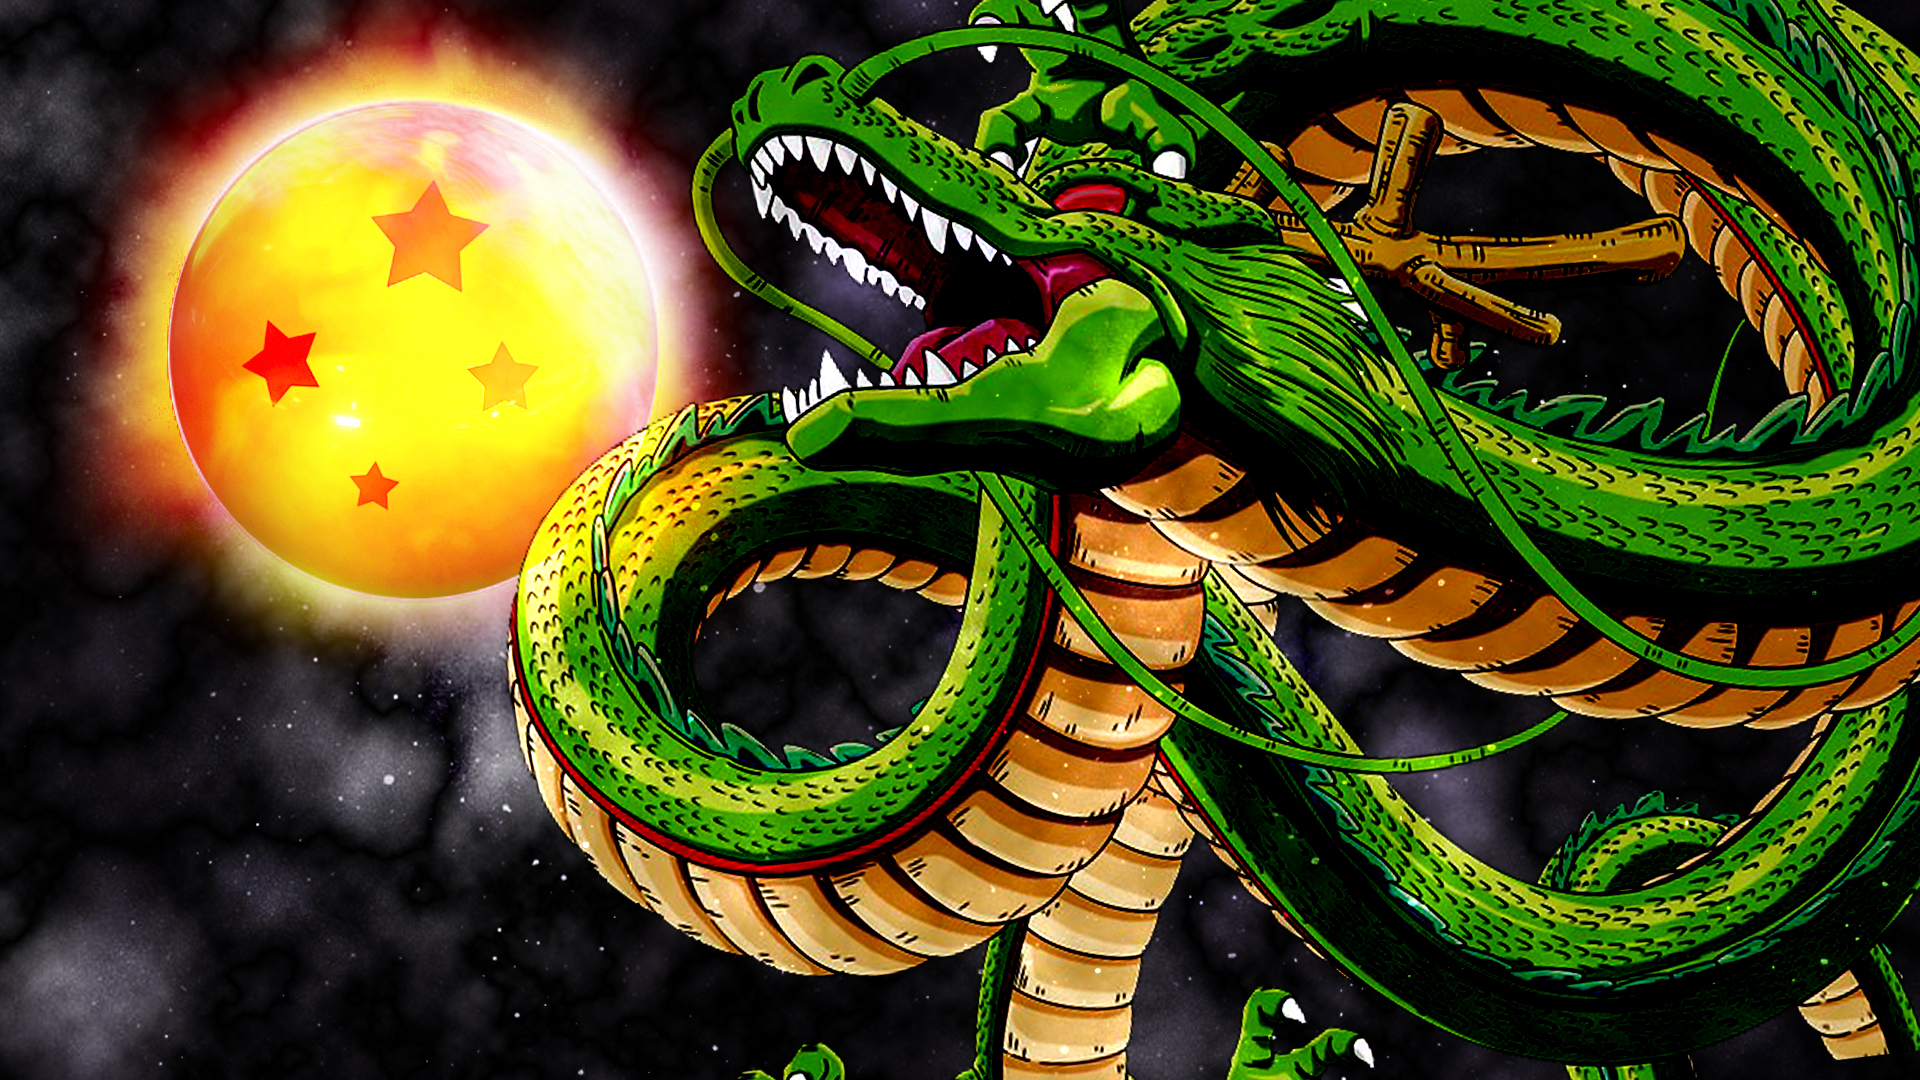 Fusion dragon ball wallpaper by vuLC4no on DeviantArt